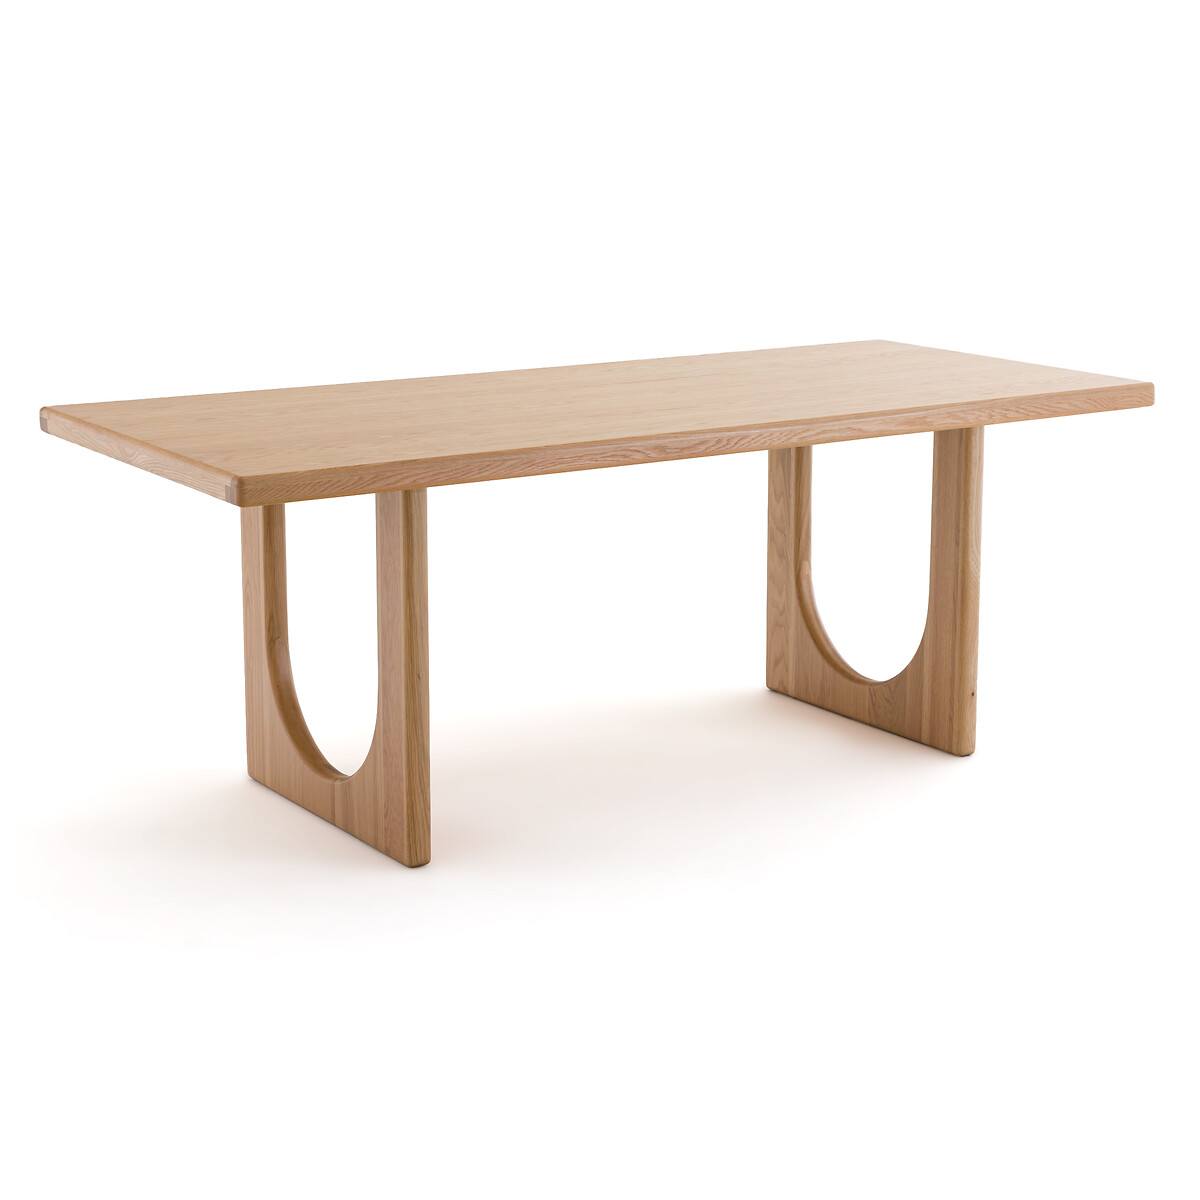 Les Signatures - Douve Solid Oak Dining Table (Seats 6-8)